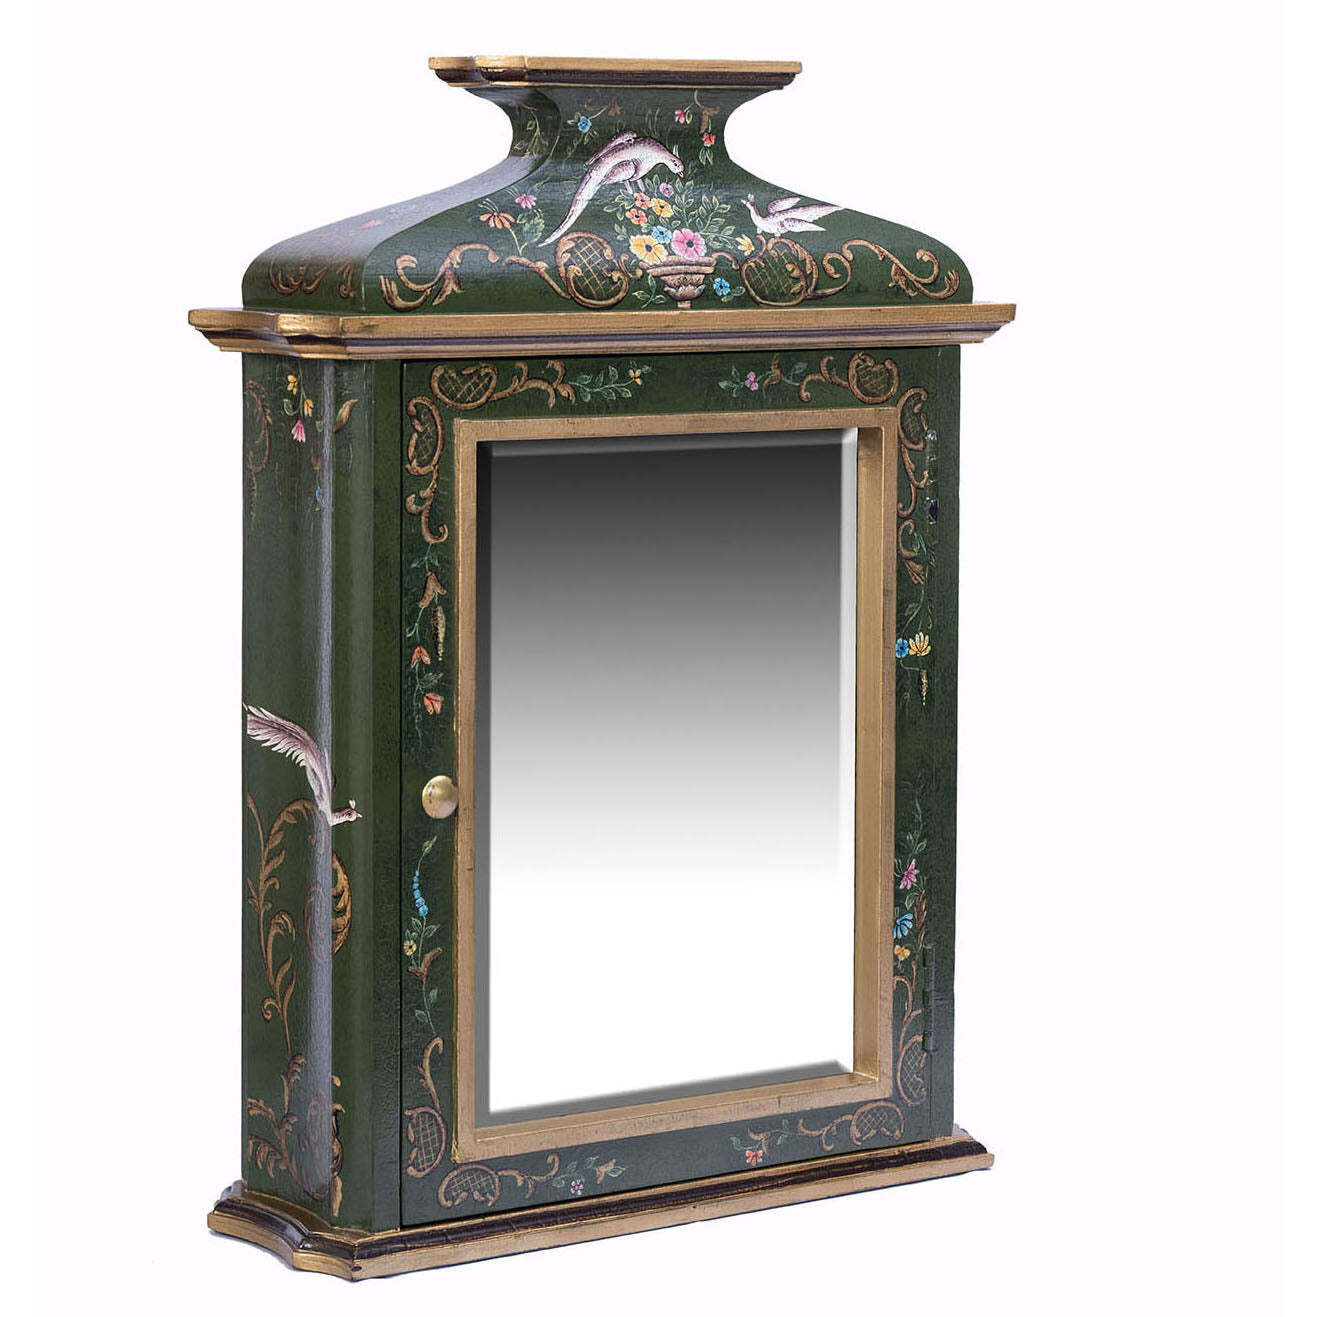 Green Fountain Design Key Cabinet - image 1